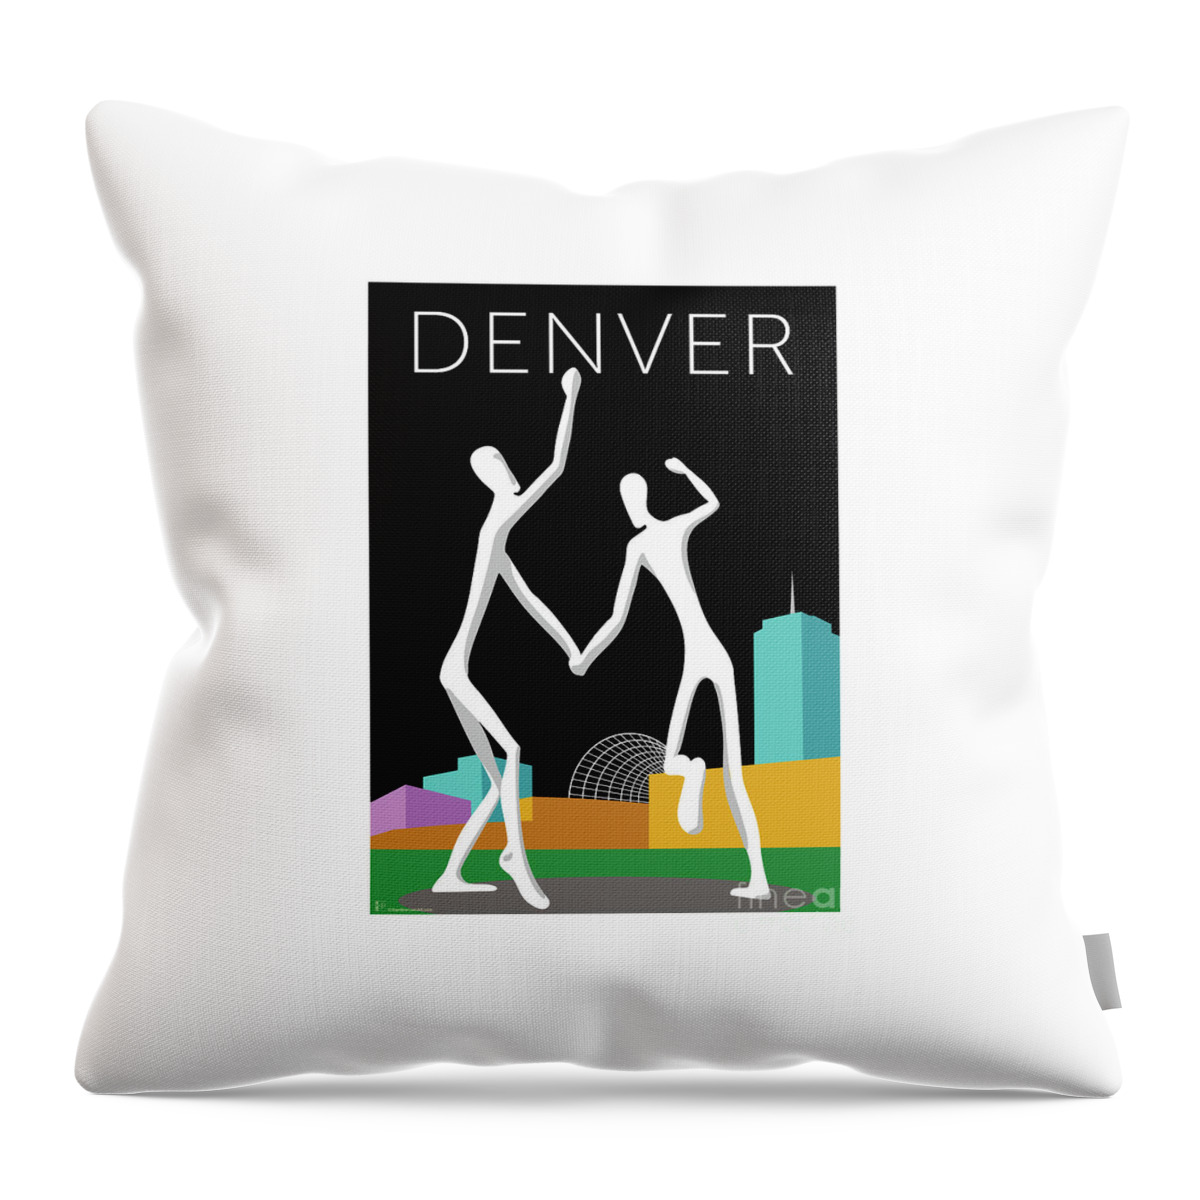 Denver Throw Pillow featuring the digital art DENVER Dancers/Black by Sam Brennan